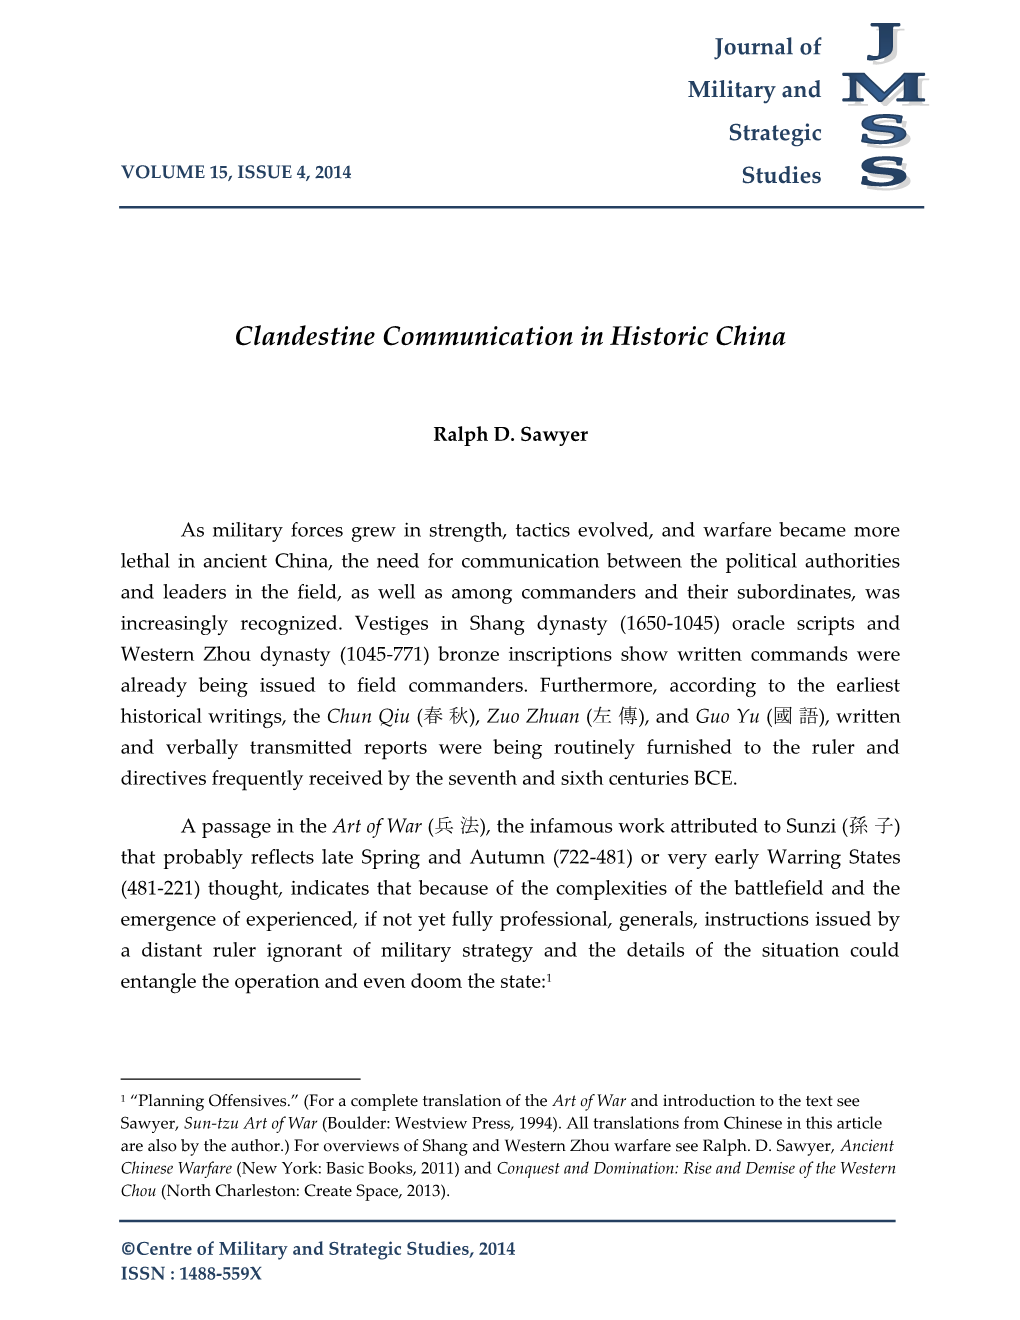 Clandestine Communication in Historic China